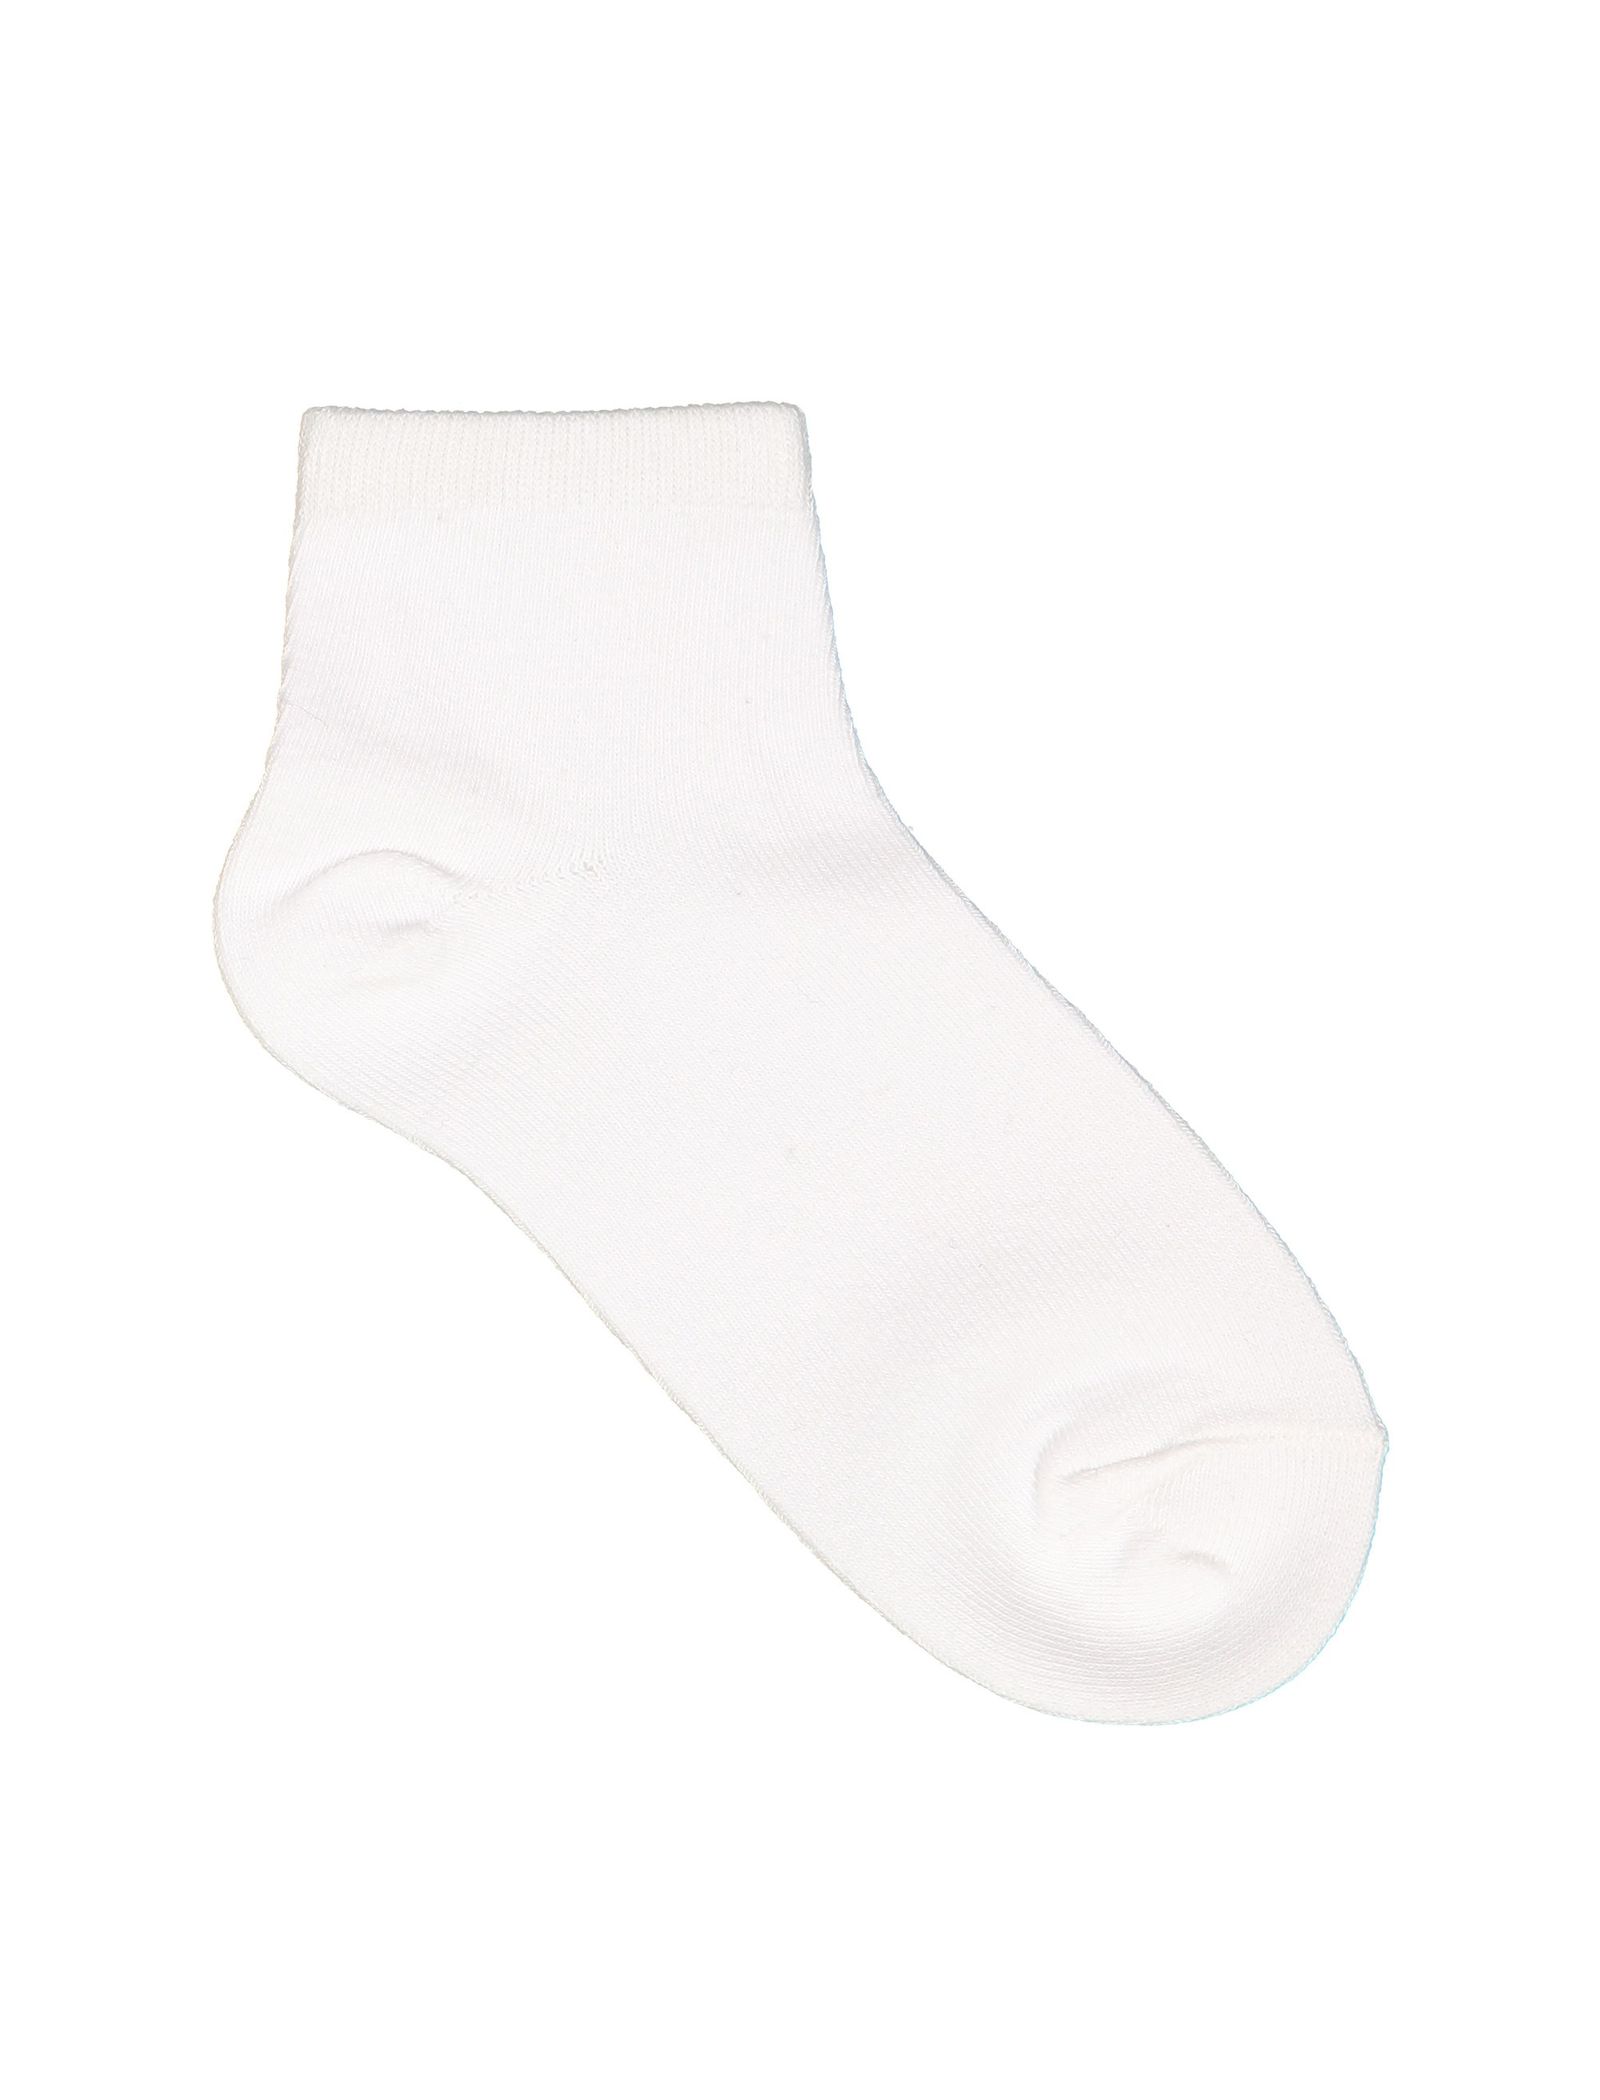 جوراب نخی ساق کوتاه مردانه بسته 5 عددی - باتا -  - 5